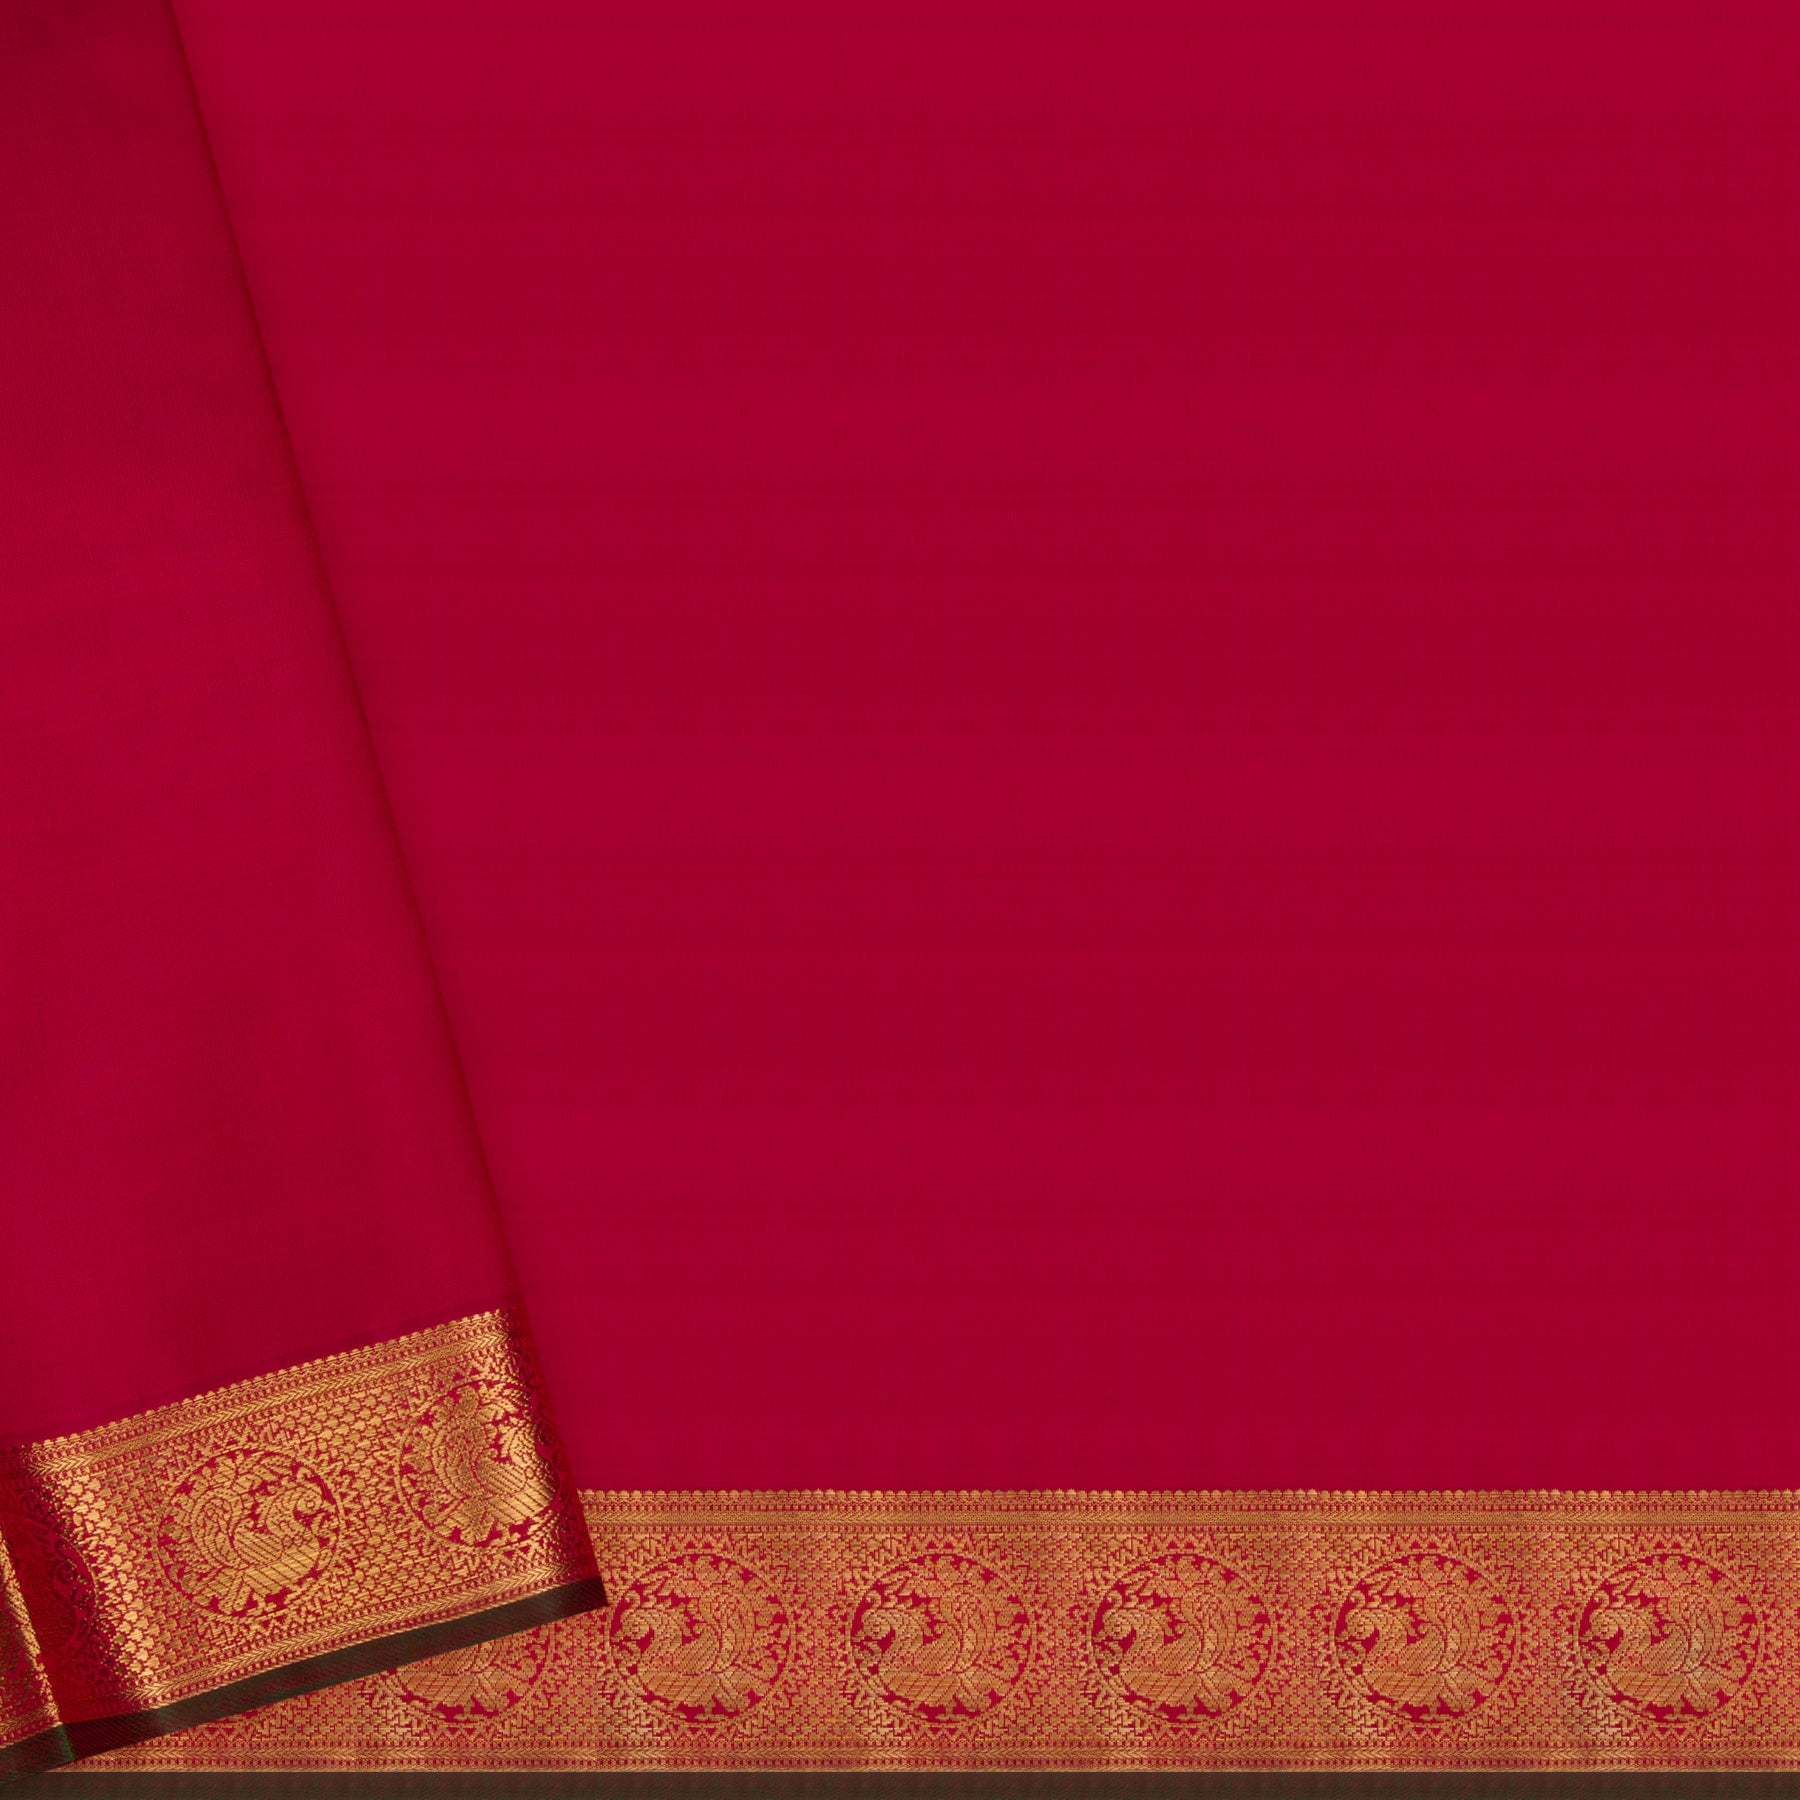 Kanakavalli Kanjivaram Silk Sari 23-110-HS001-08304 - Blouse View